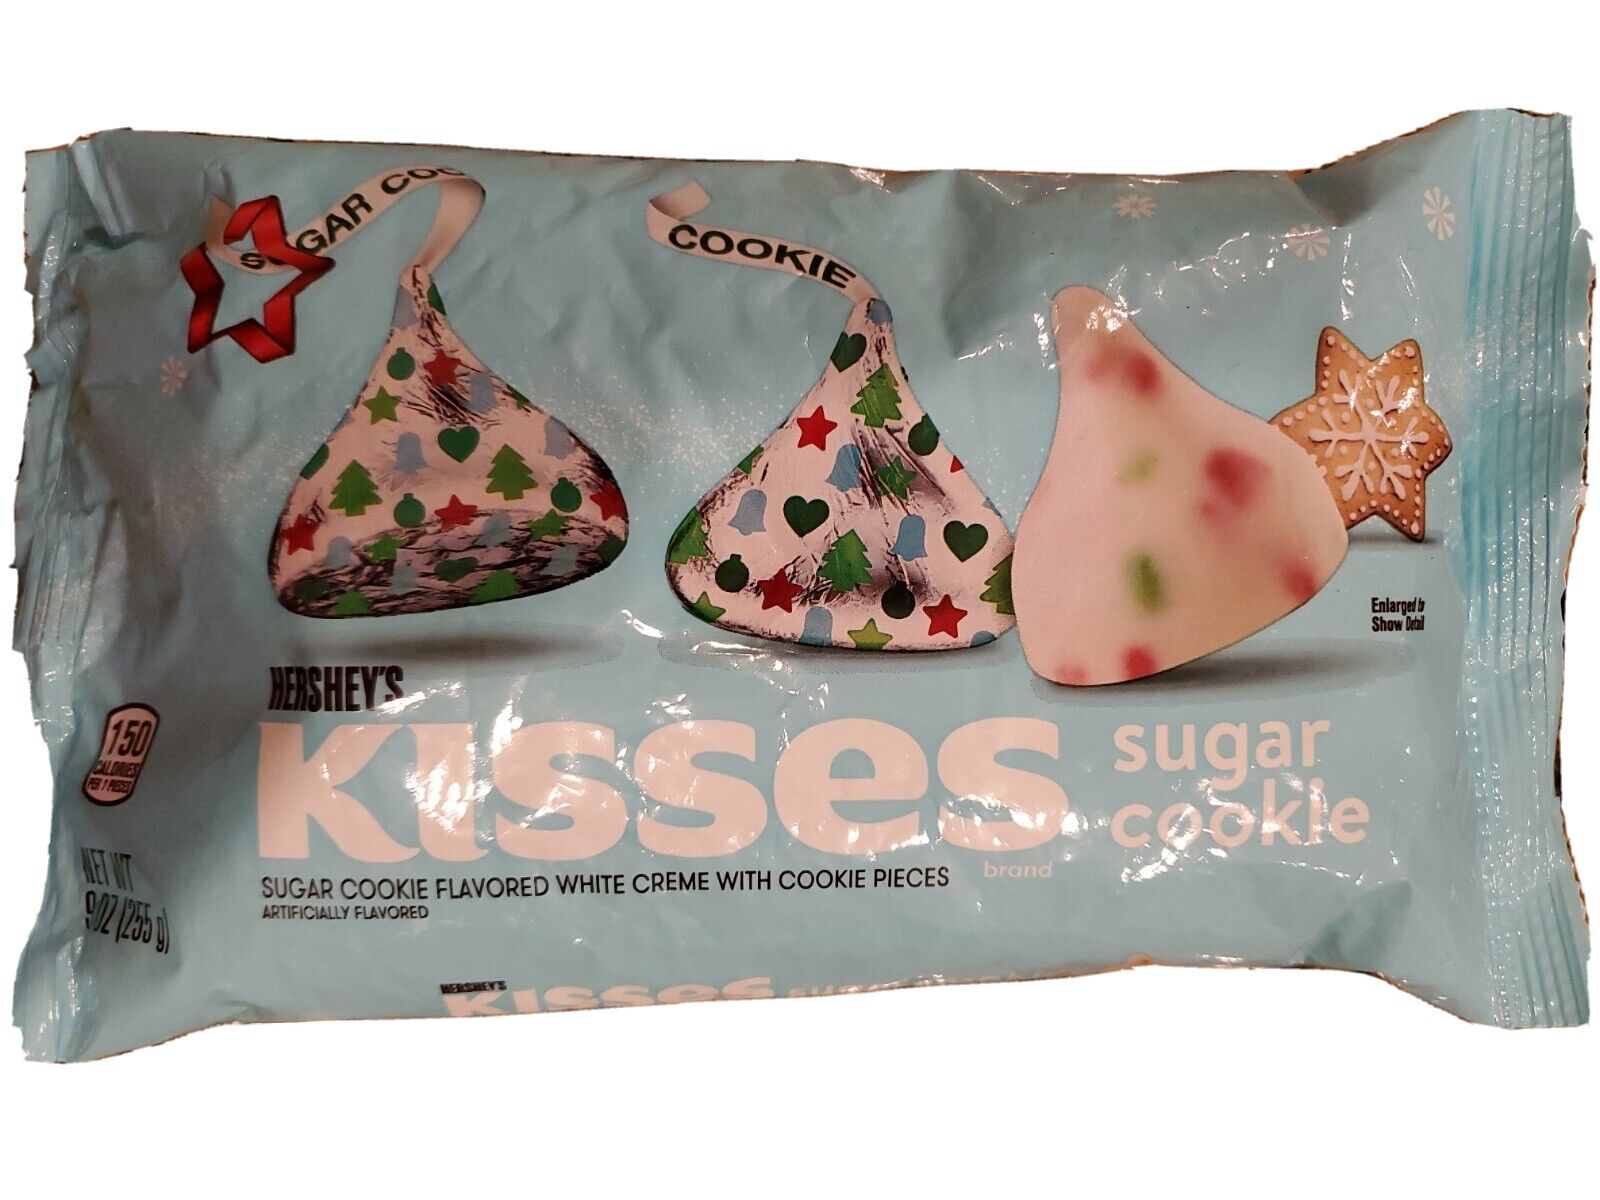 HERSHEY'S KISSES WHITE CHOCOLATE SUGAR COOKIE 9-OZ BAG